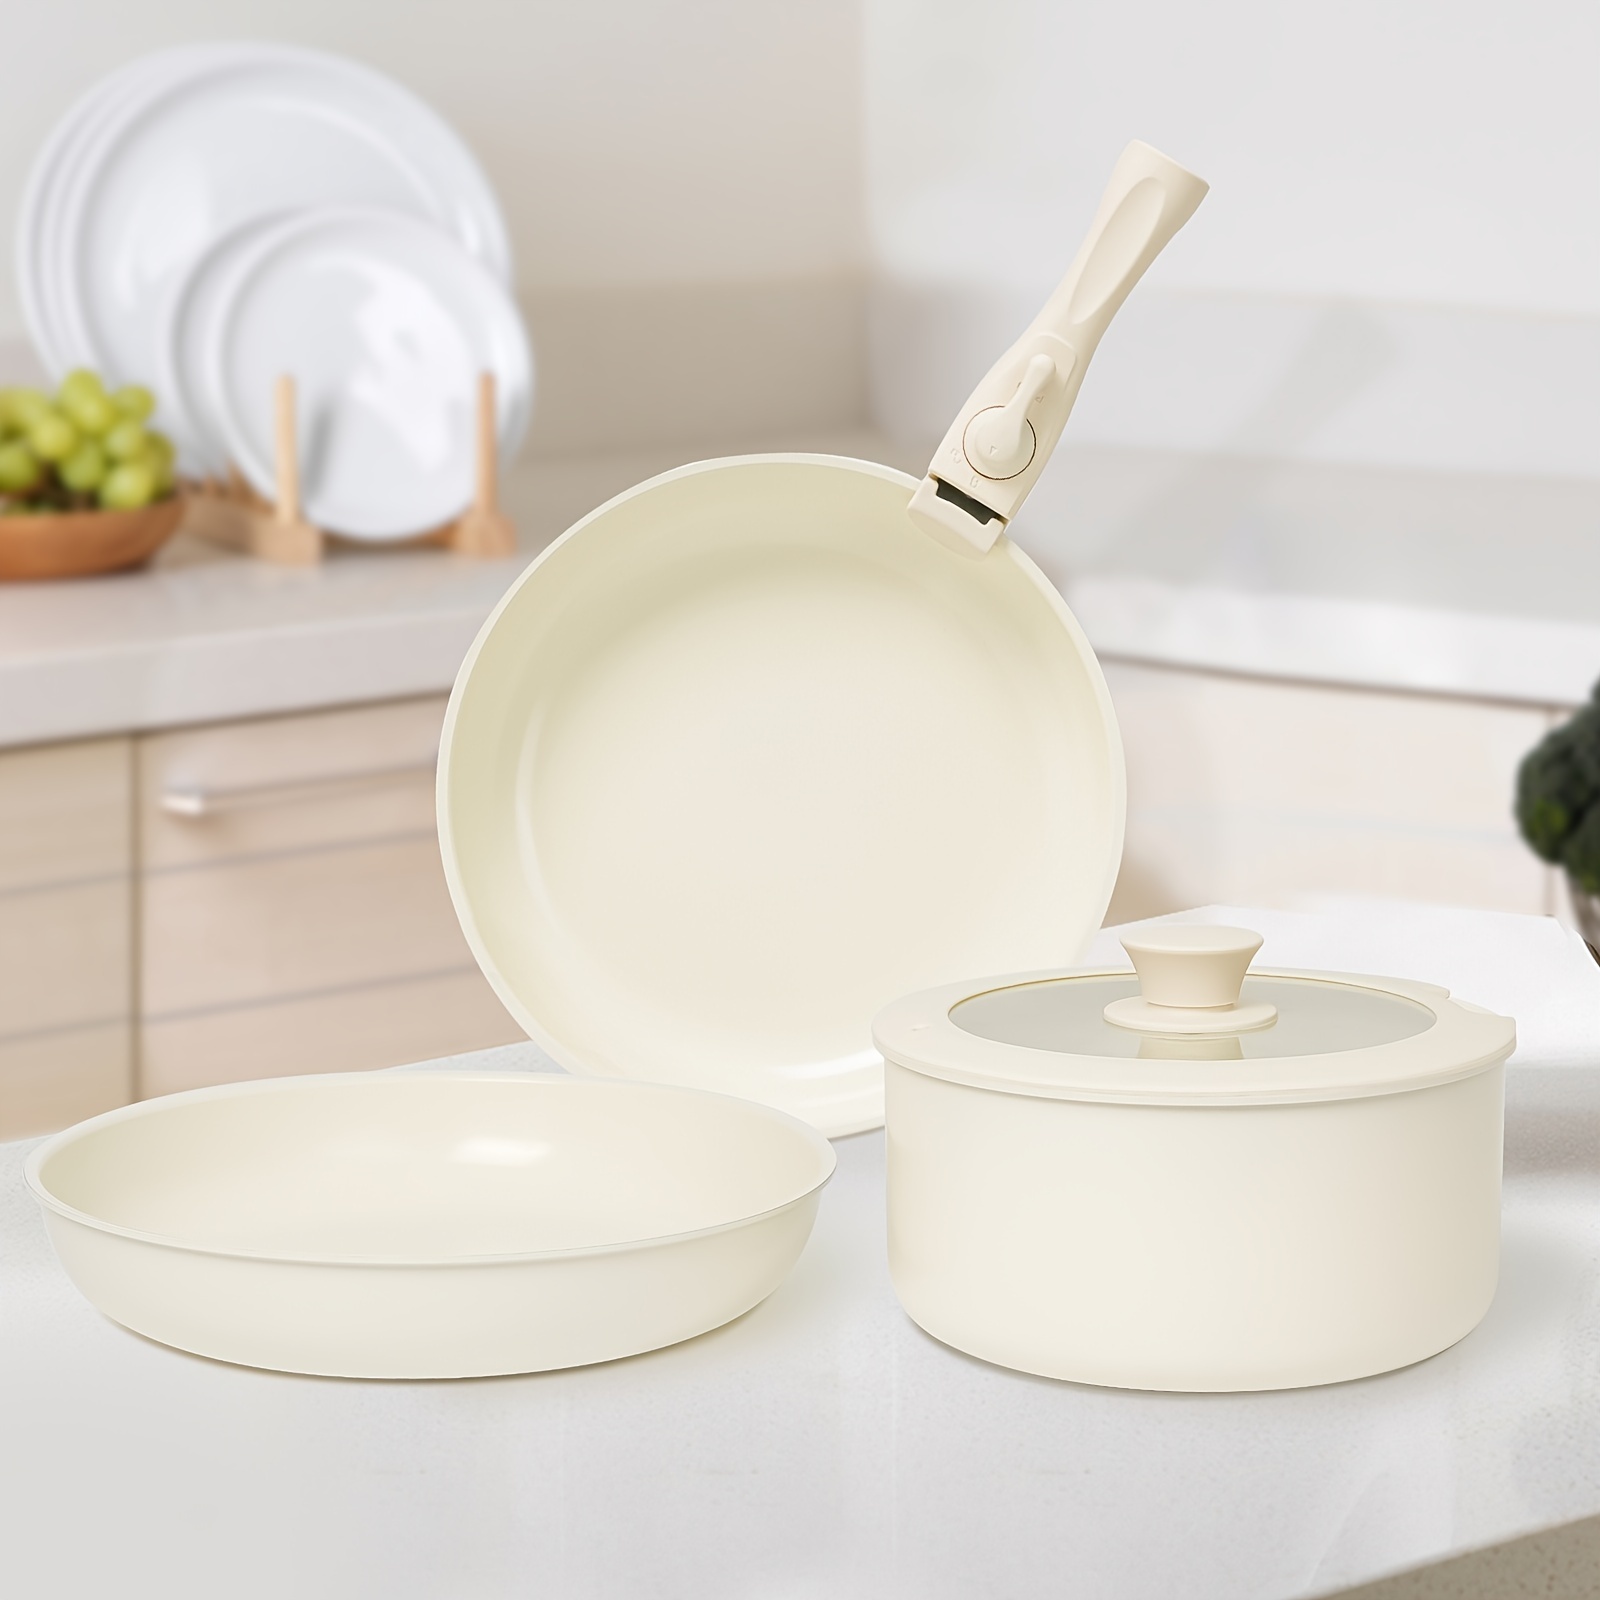 

5 Pcs Pots And Pans Set, Nonstick Kitchen Cookware Set With Detachable Handle, Induction Cookware, Dishwasher Oven Safe, Beige